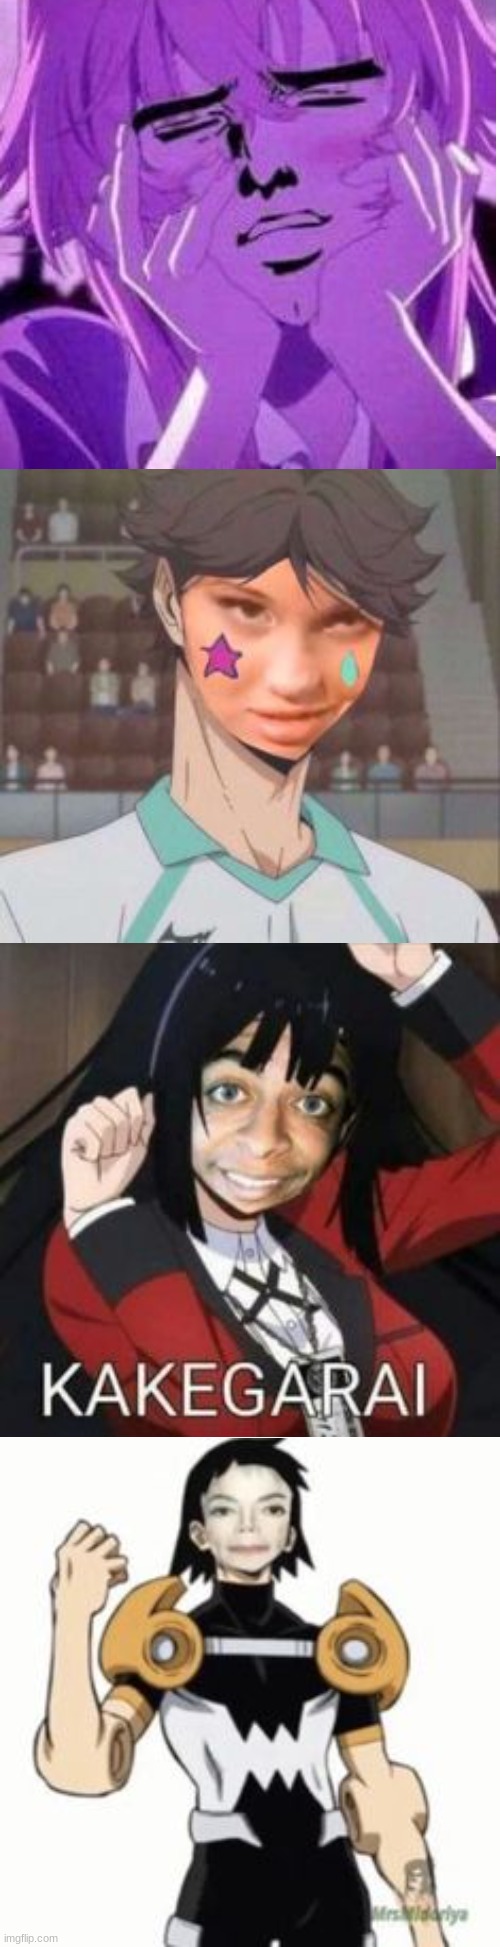 Cursed Anime Images Meme Lasopacustom